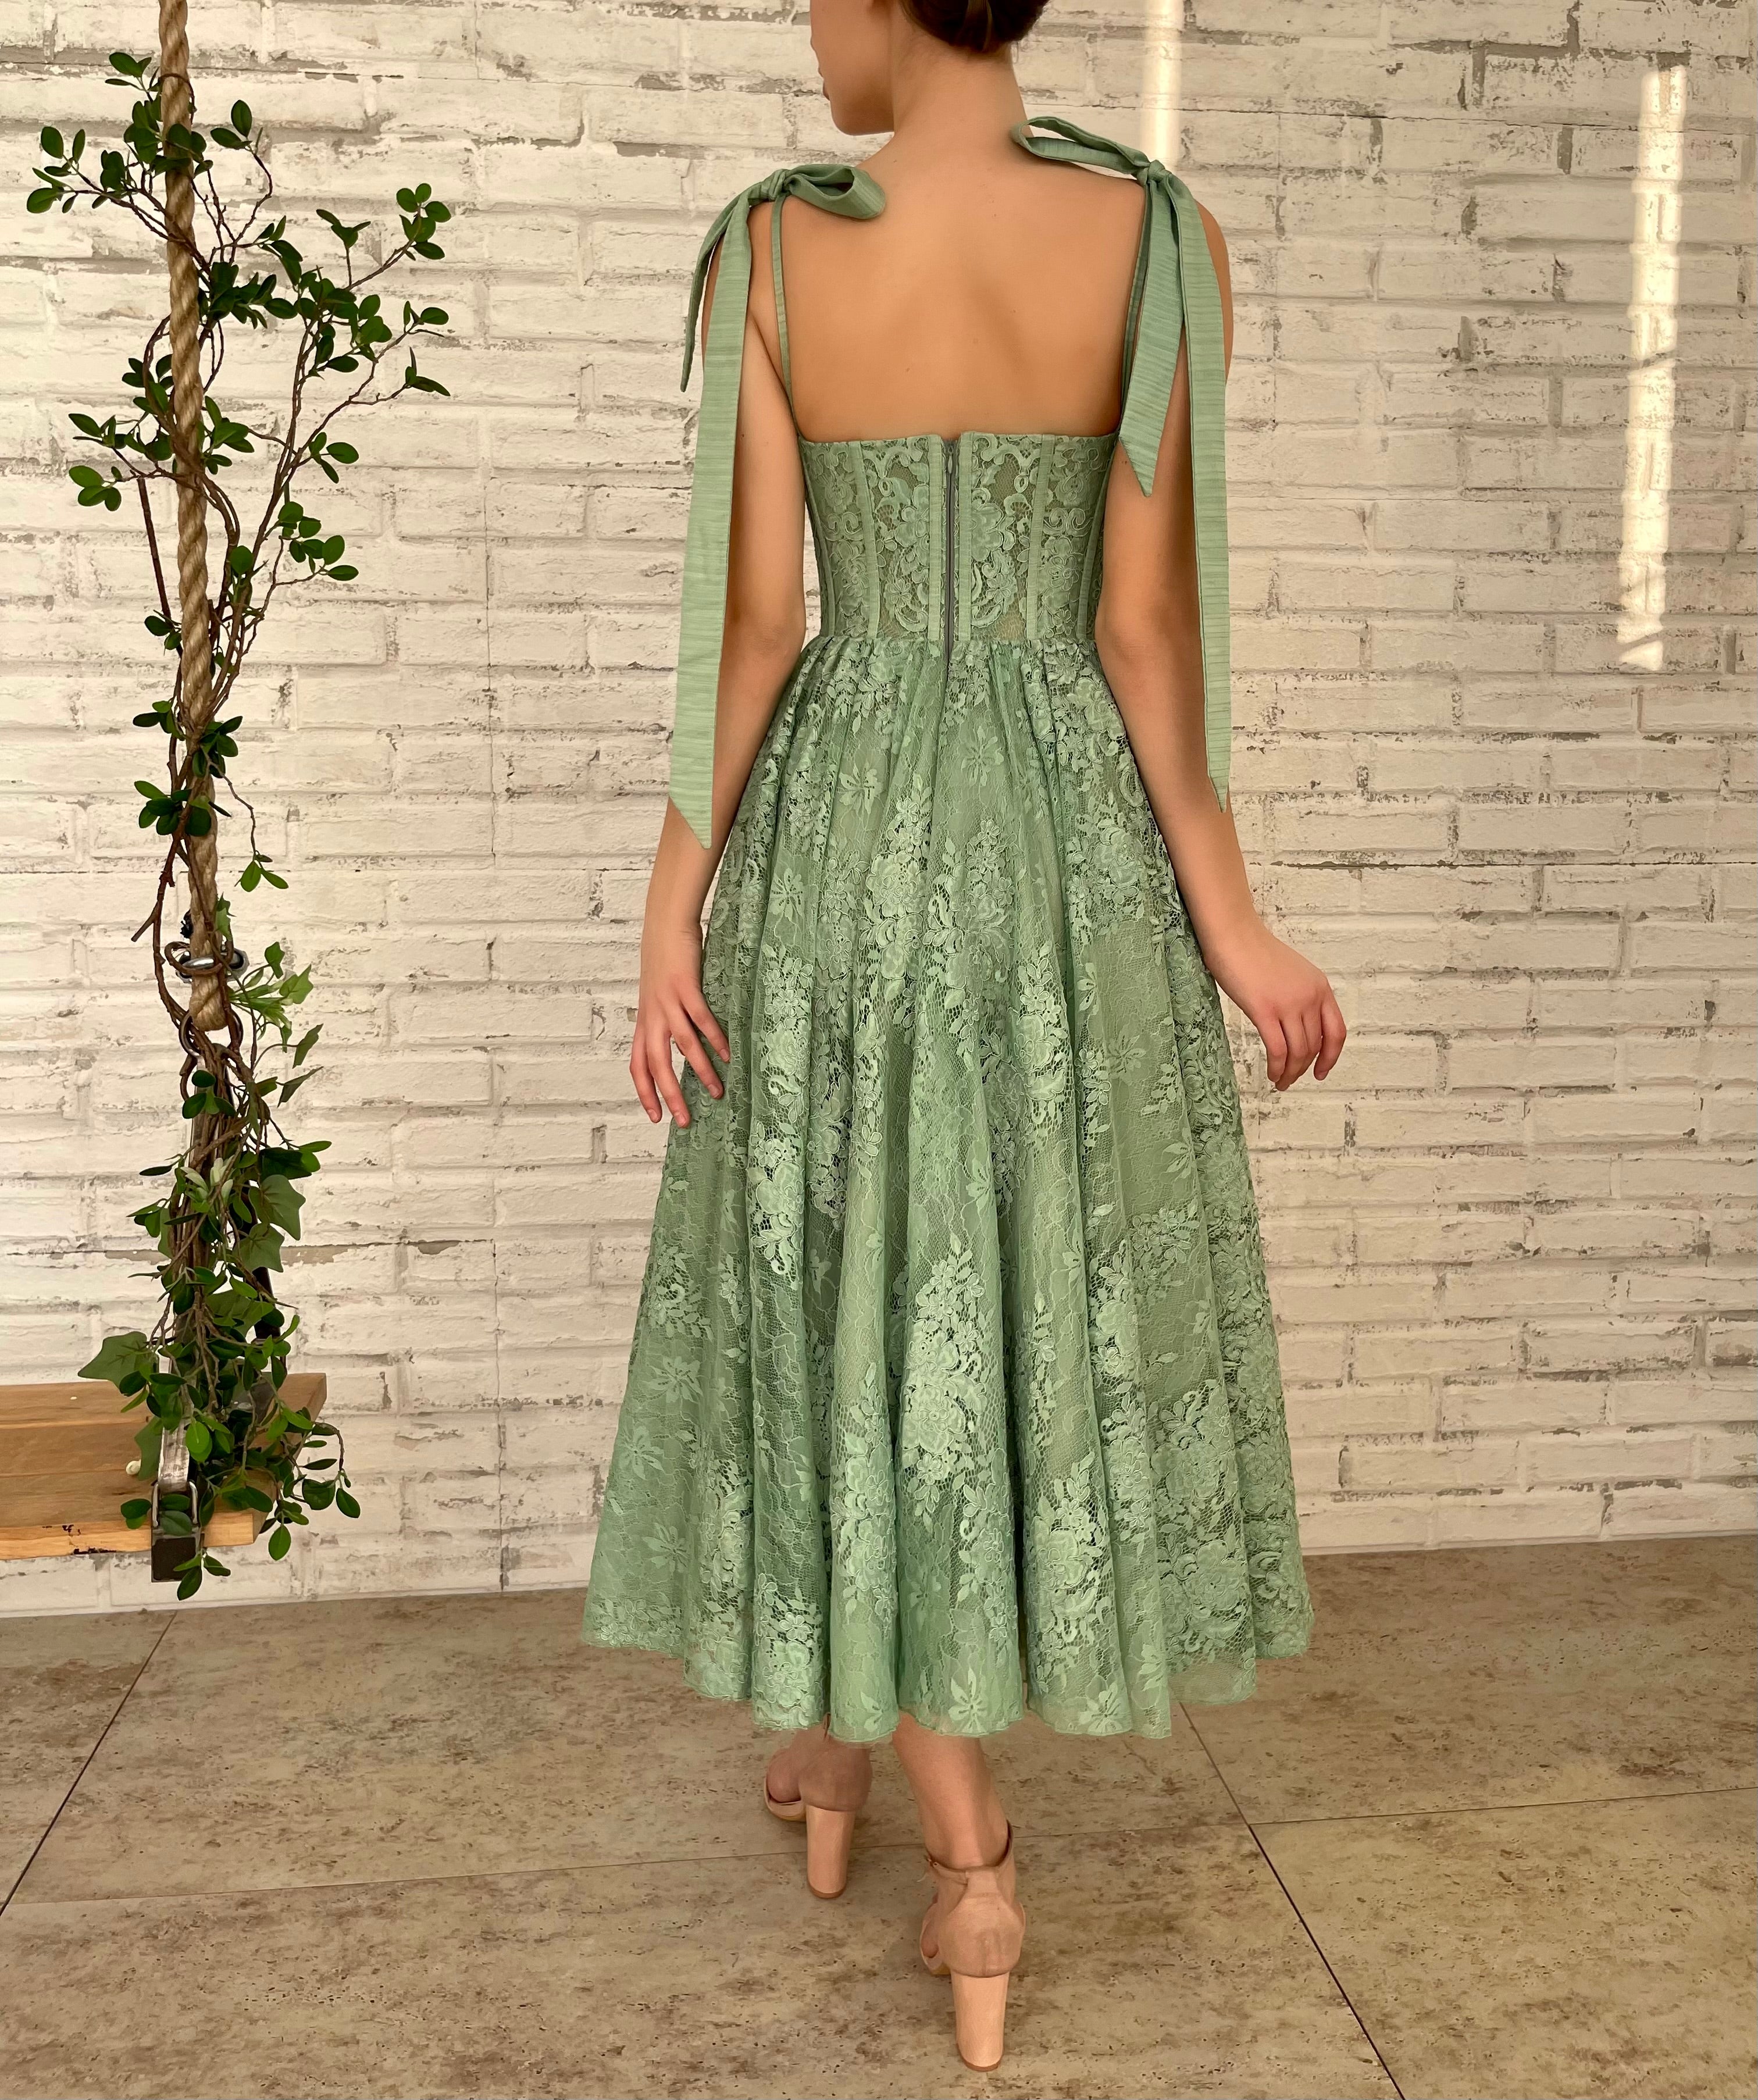 Green midi dress with bow straps